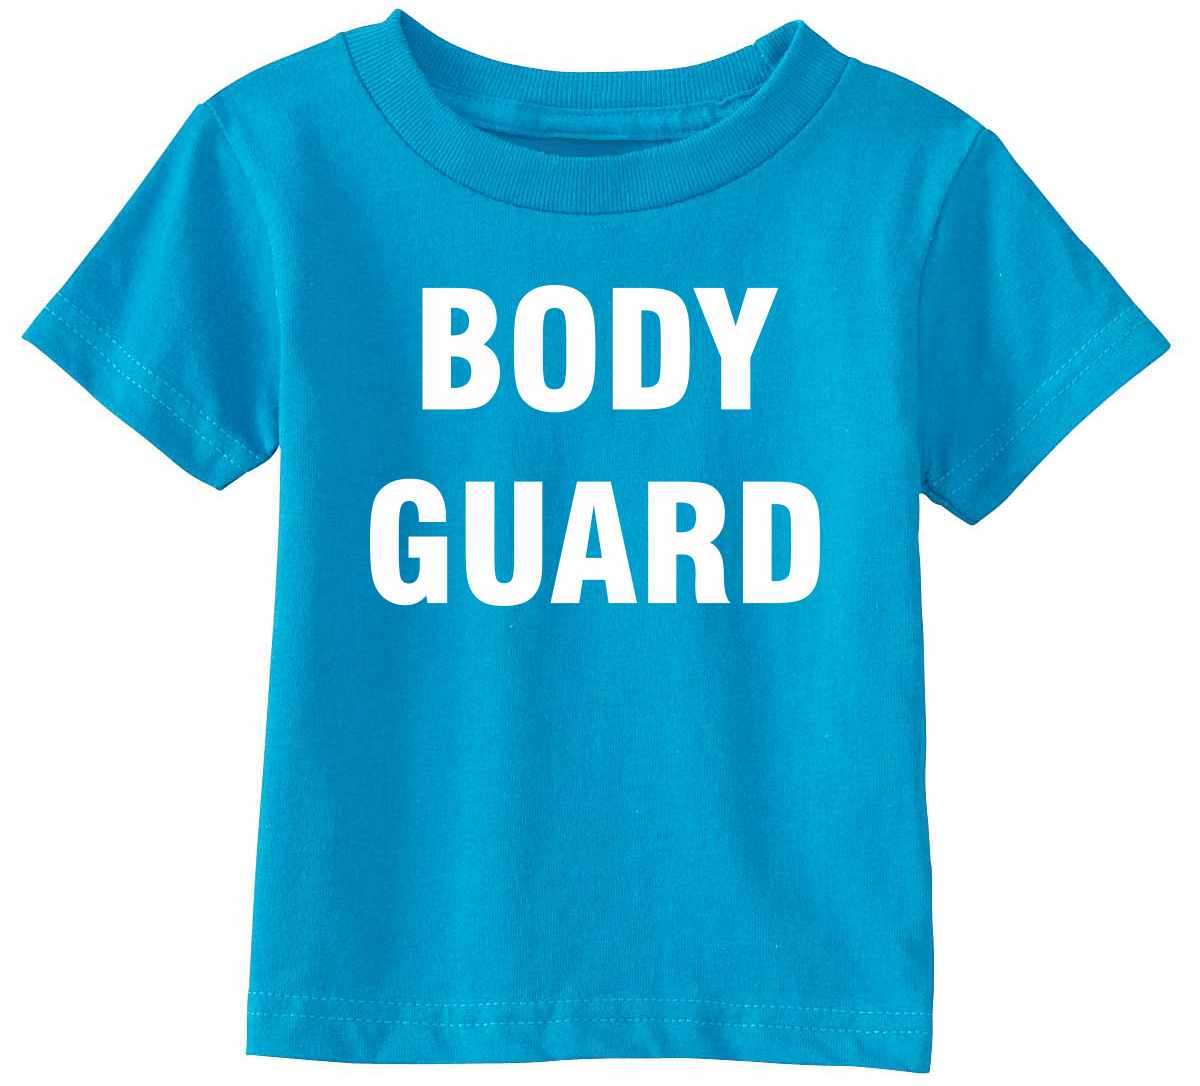 BODY GUARD Infant/Toddler 